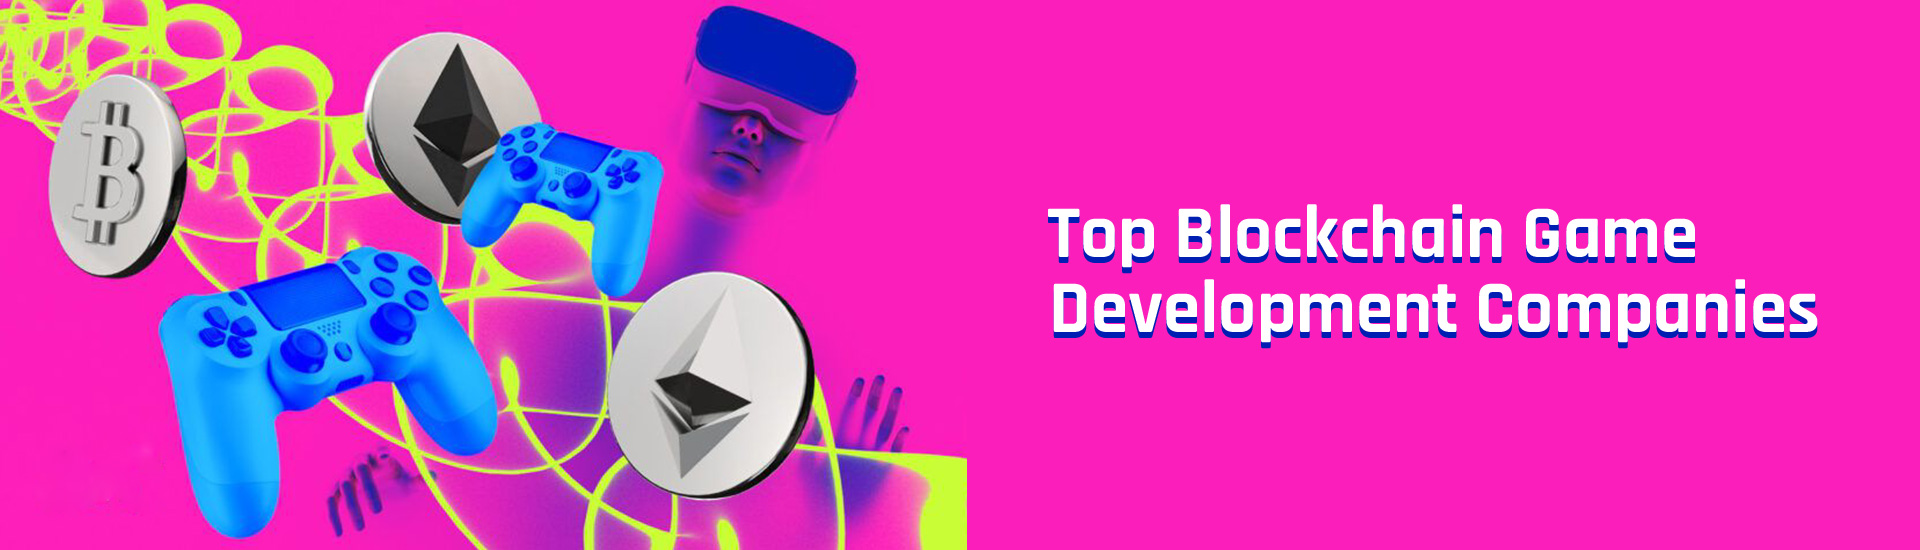 Top Blockchain Game Development Studios